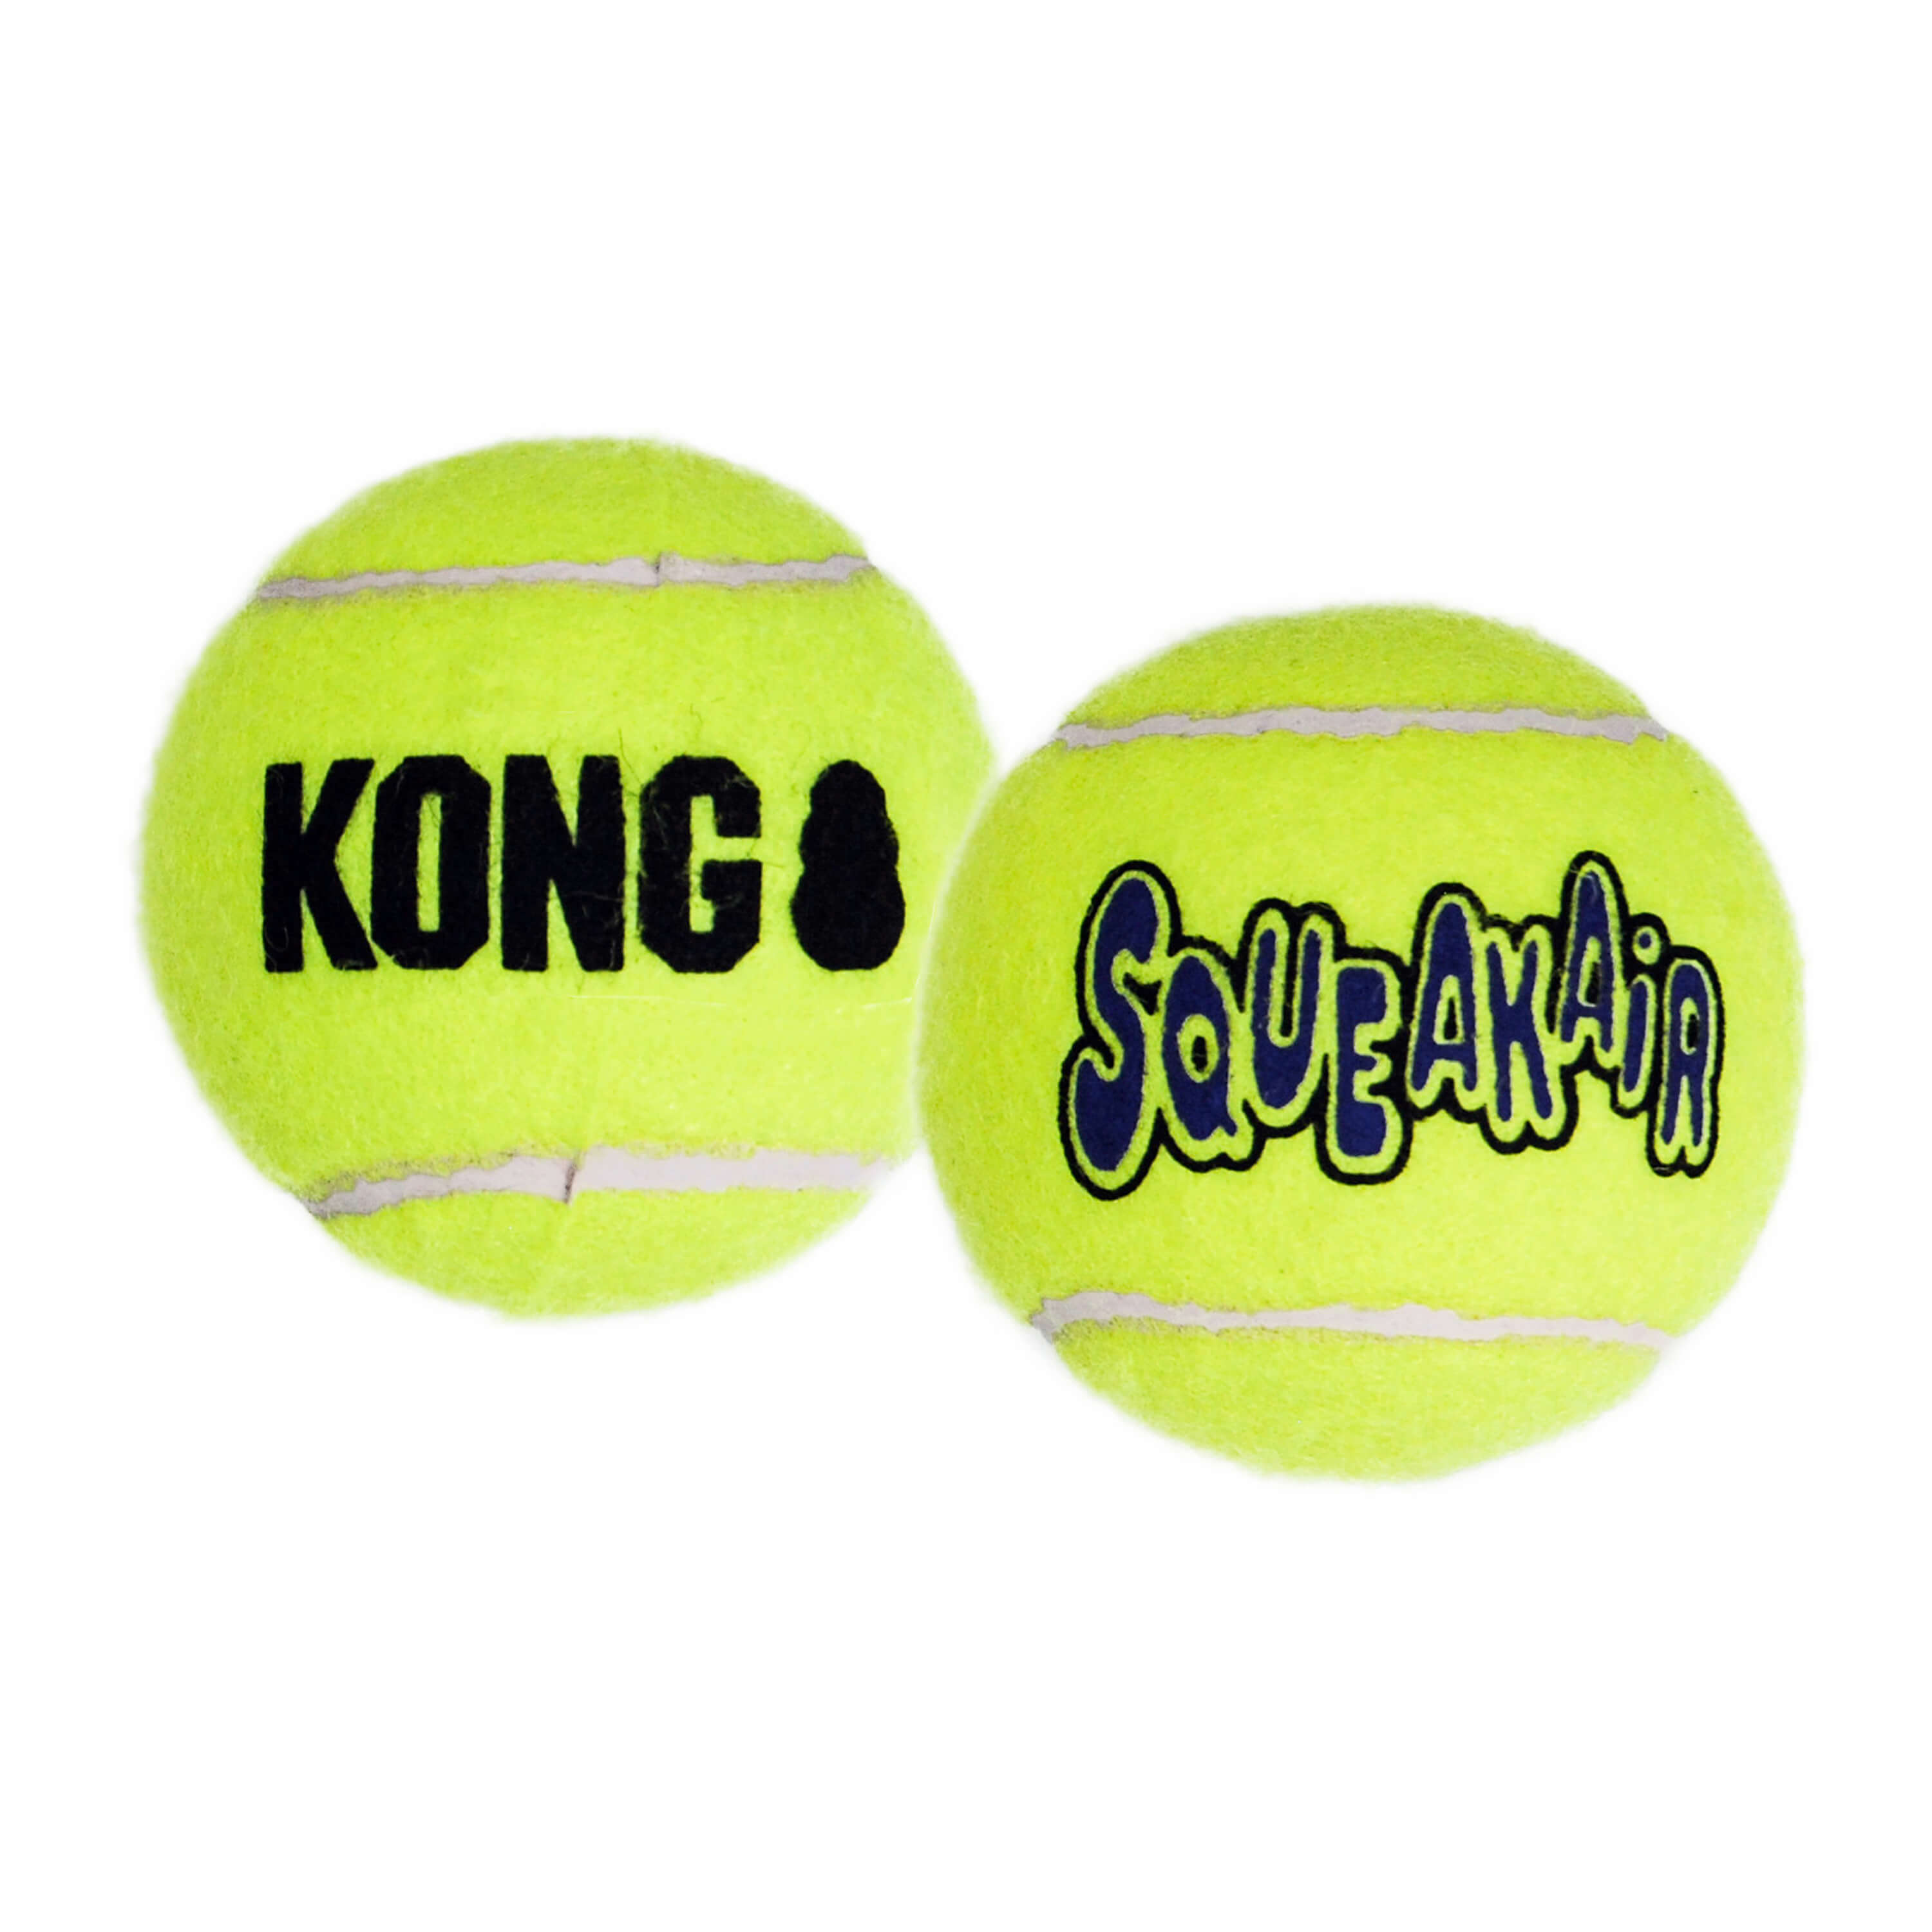 Two kong dog toy - squeakair balls